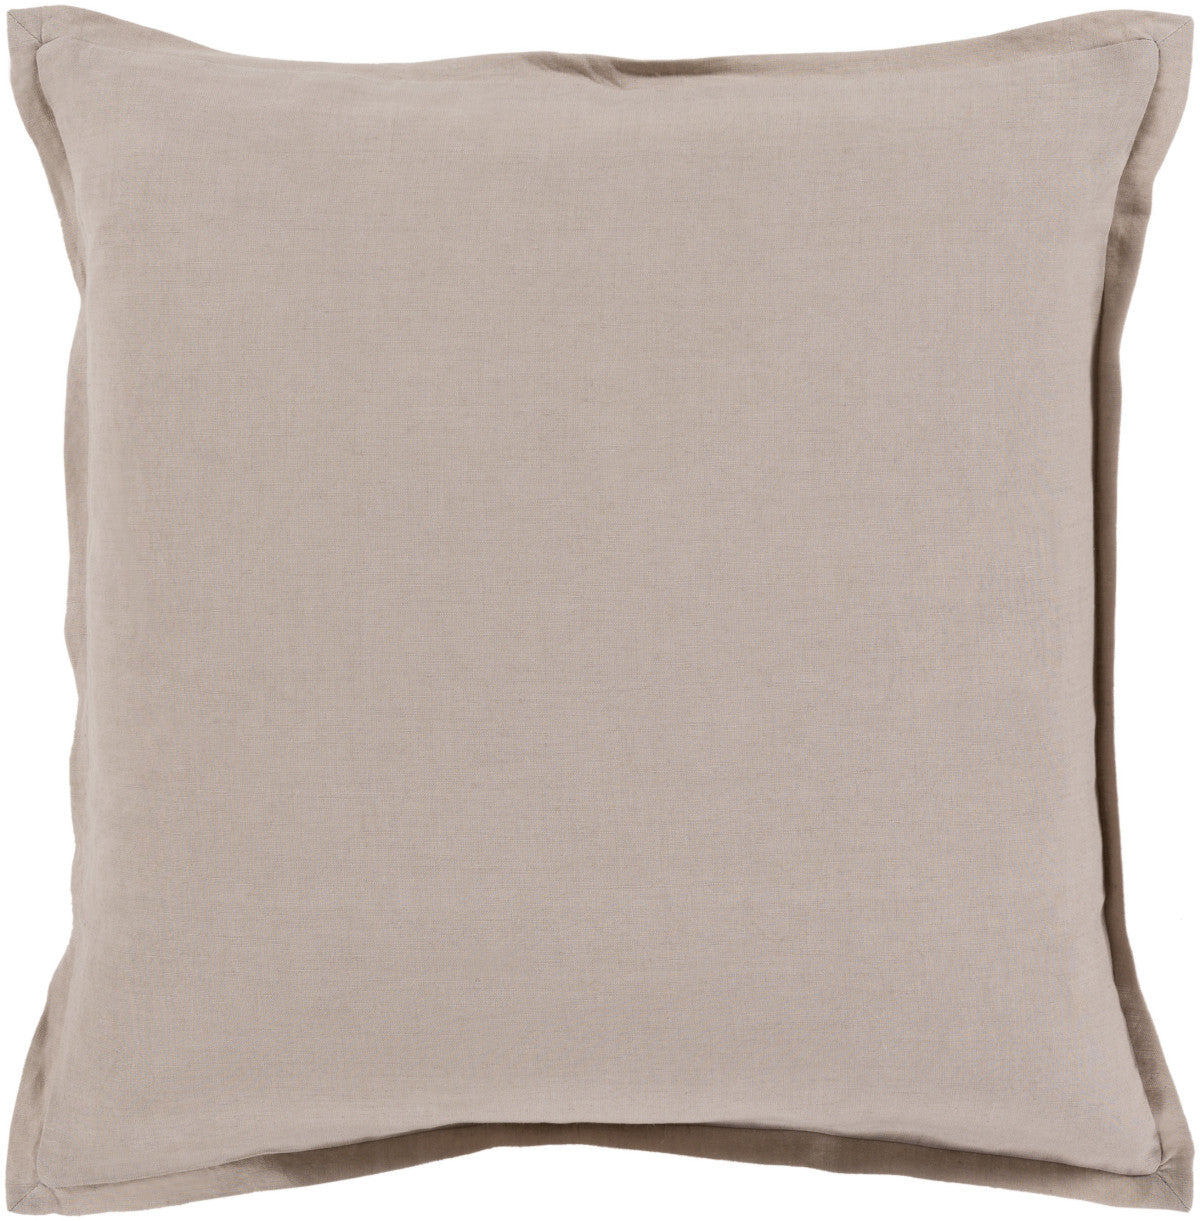 Surya Orianna OR005 Pillow